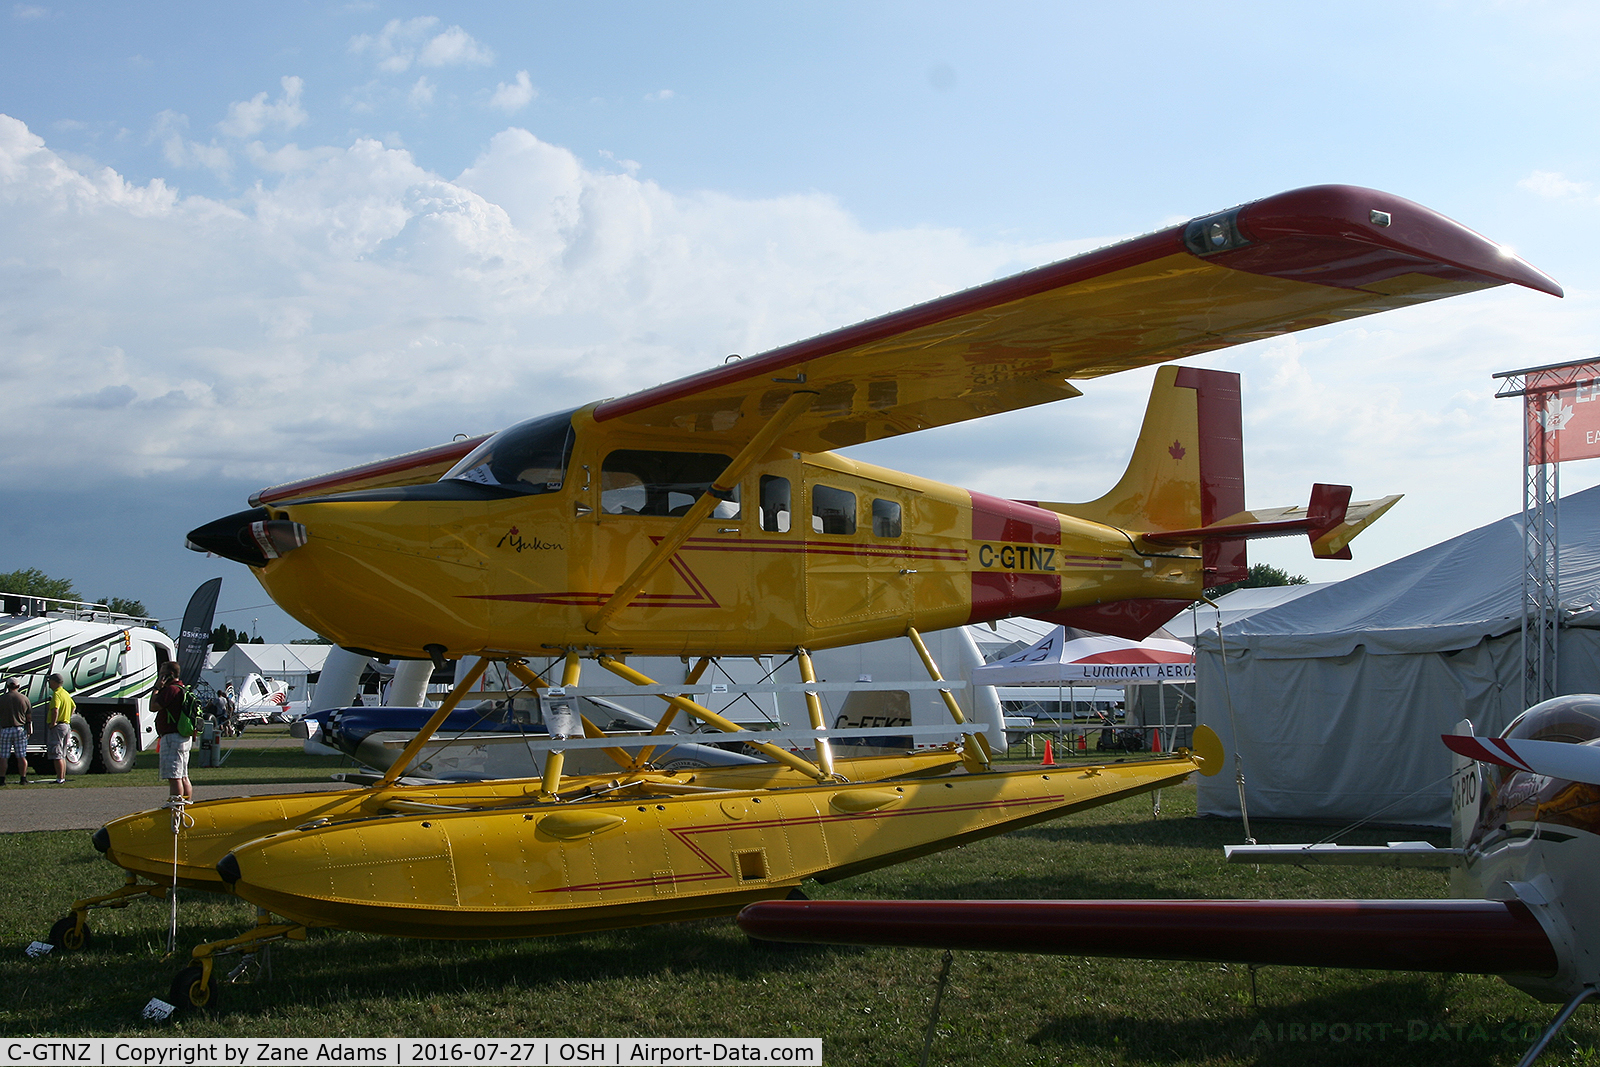 C-GTNZ, 2012 Murphy Yukon C/N 0001Y, At the 2016 EAA AirVenture - Oshkosh, Wisconsin